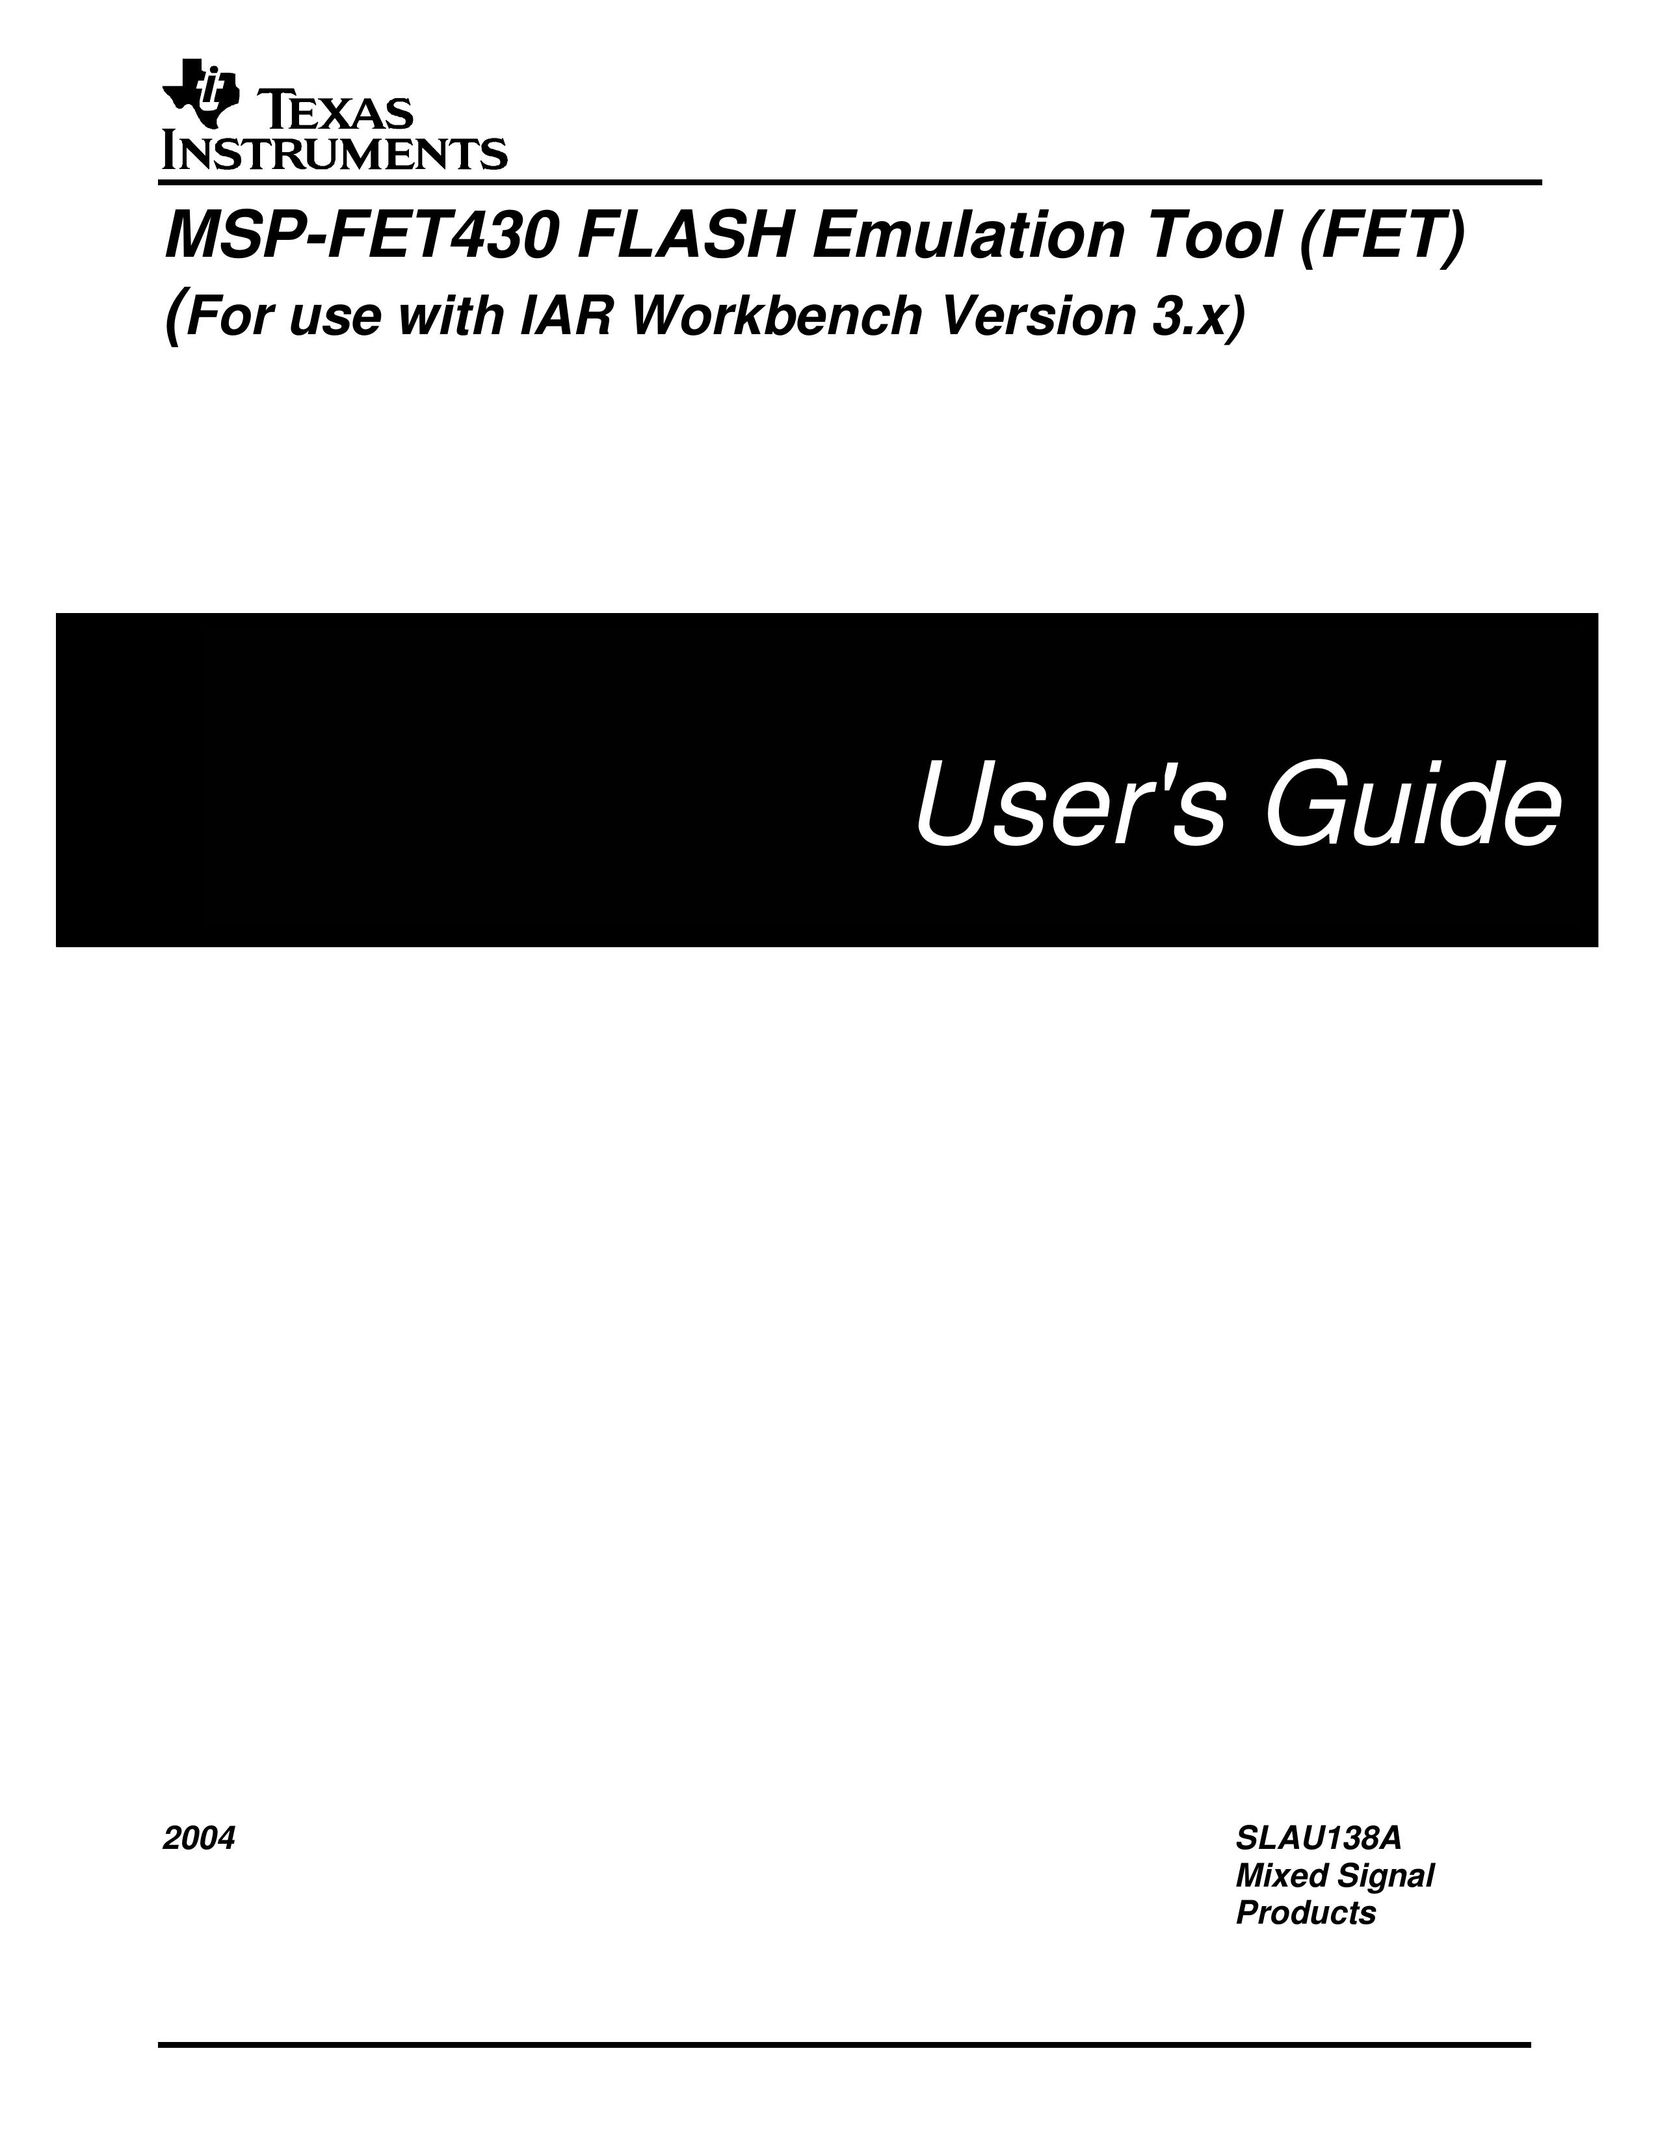 Texas Instruments MSP-FET430 Computer Hardware User Manual